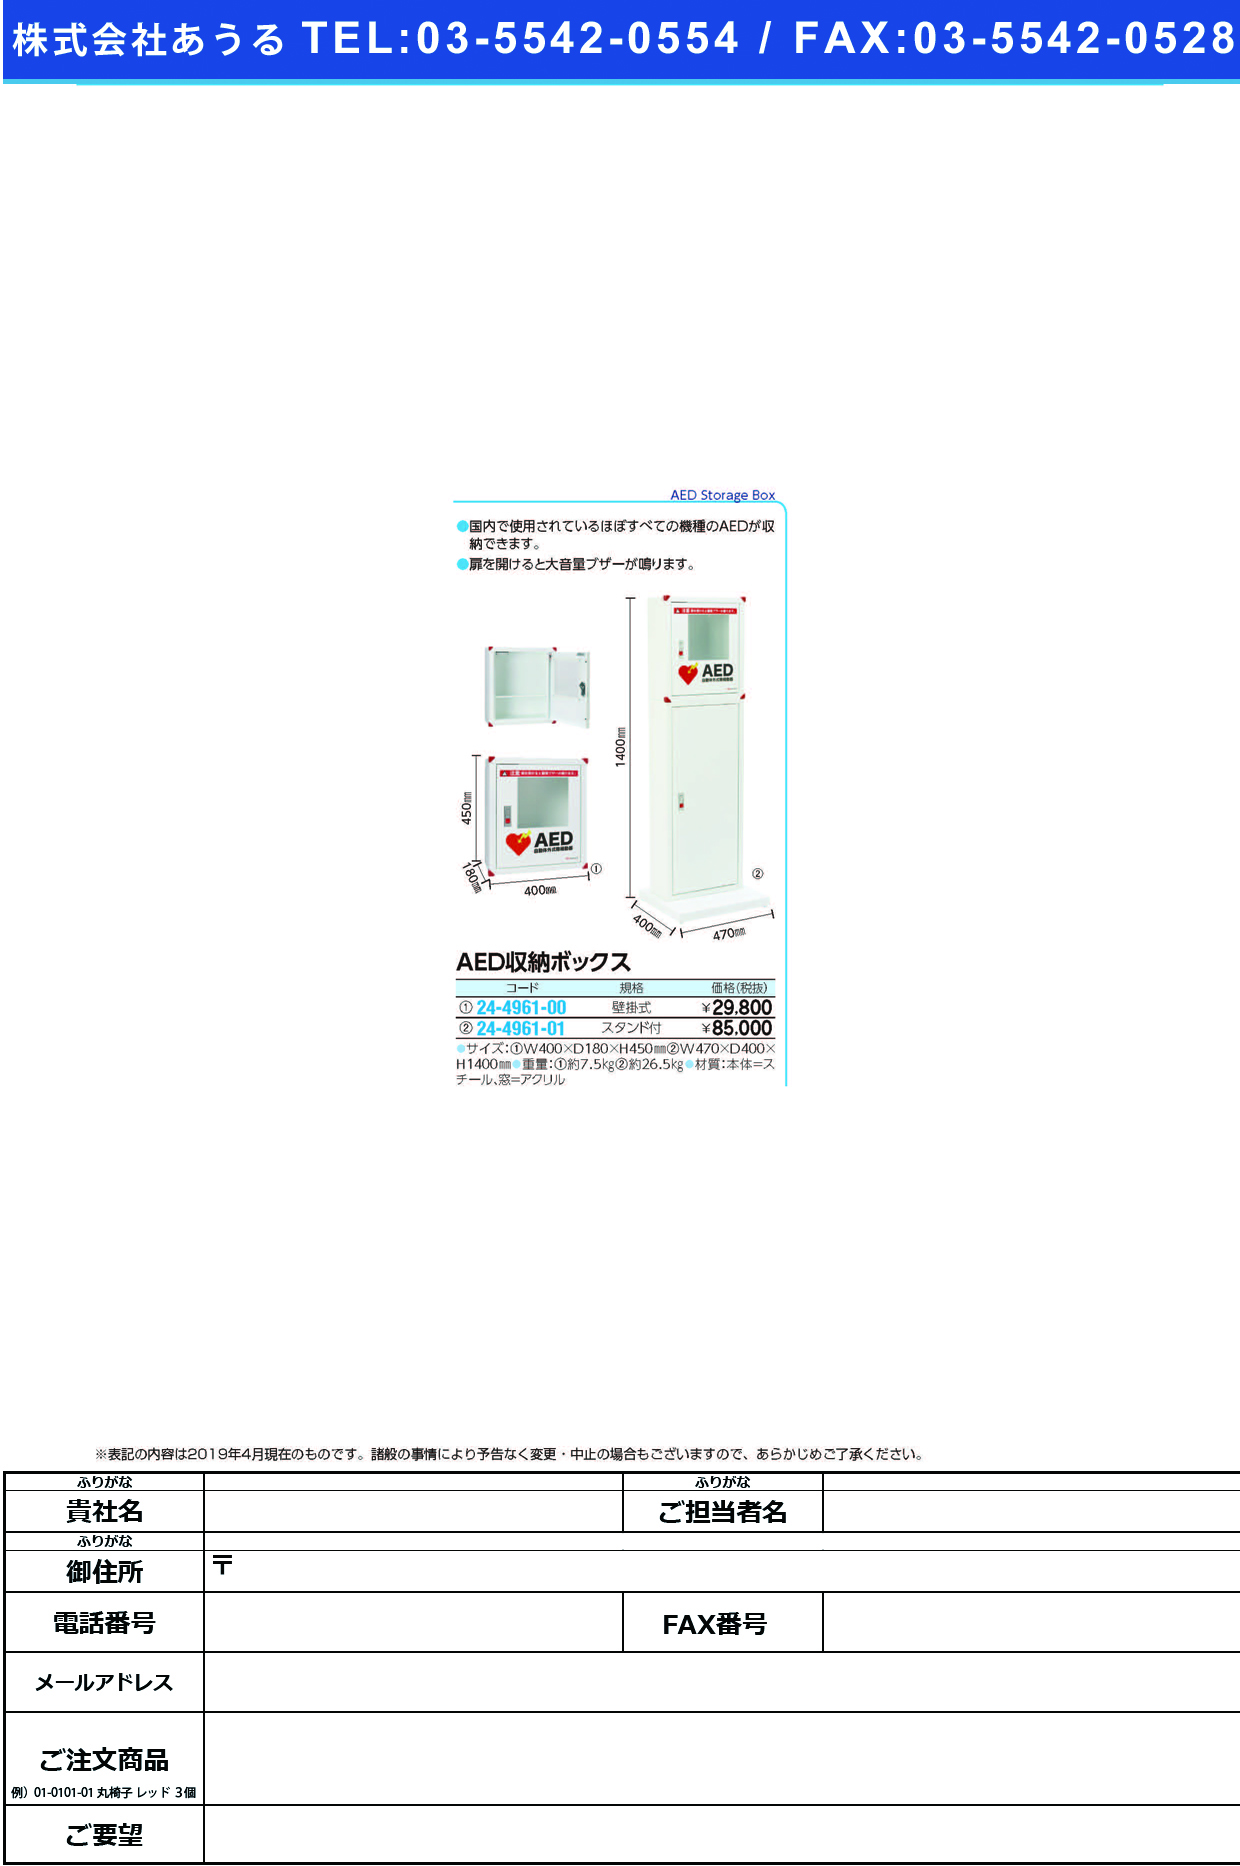 (24-4961-01)ＡＥＤ収納ボックス（スタンド付） 101-234 AEDｼｭｳﾉｳﾎﾞｯｸｽｽﾀﾝﾄﾞﾂｷ【1台単位】【2019年カタログ商品】